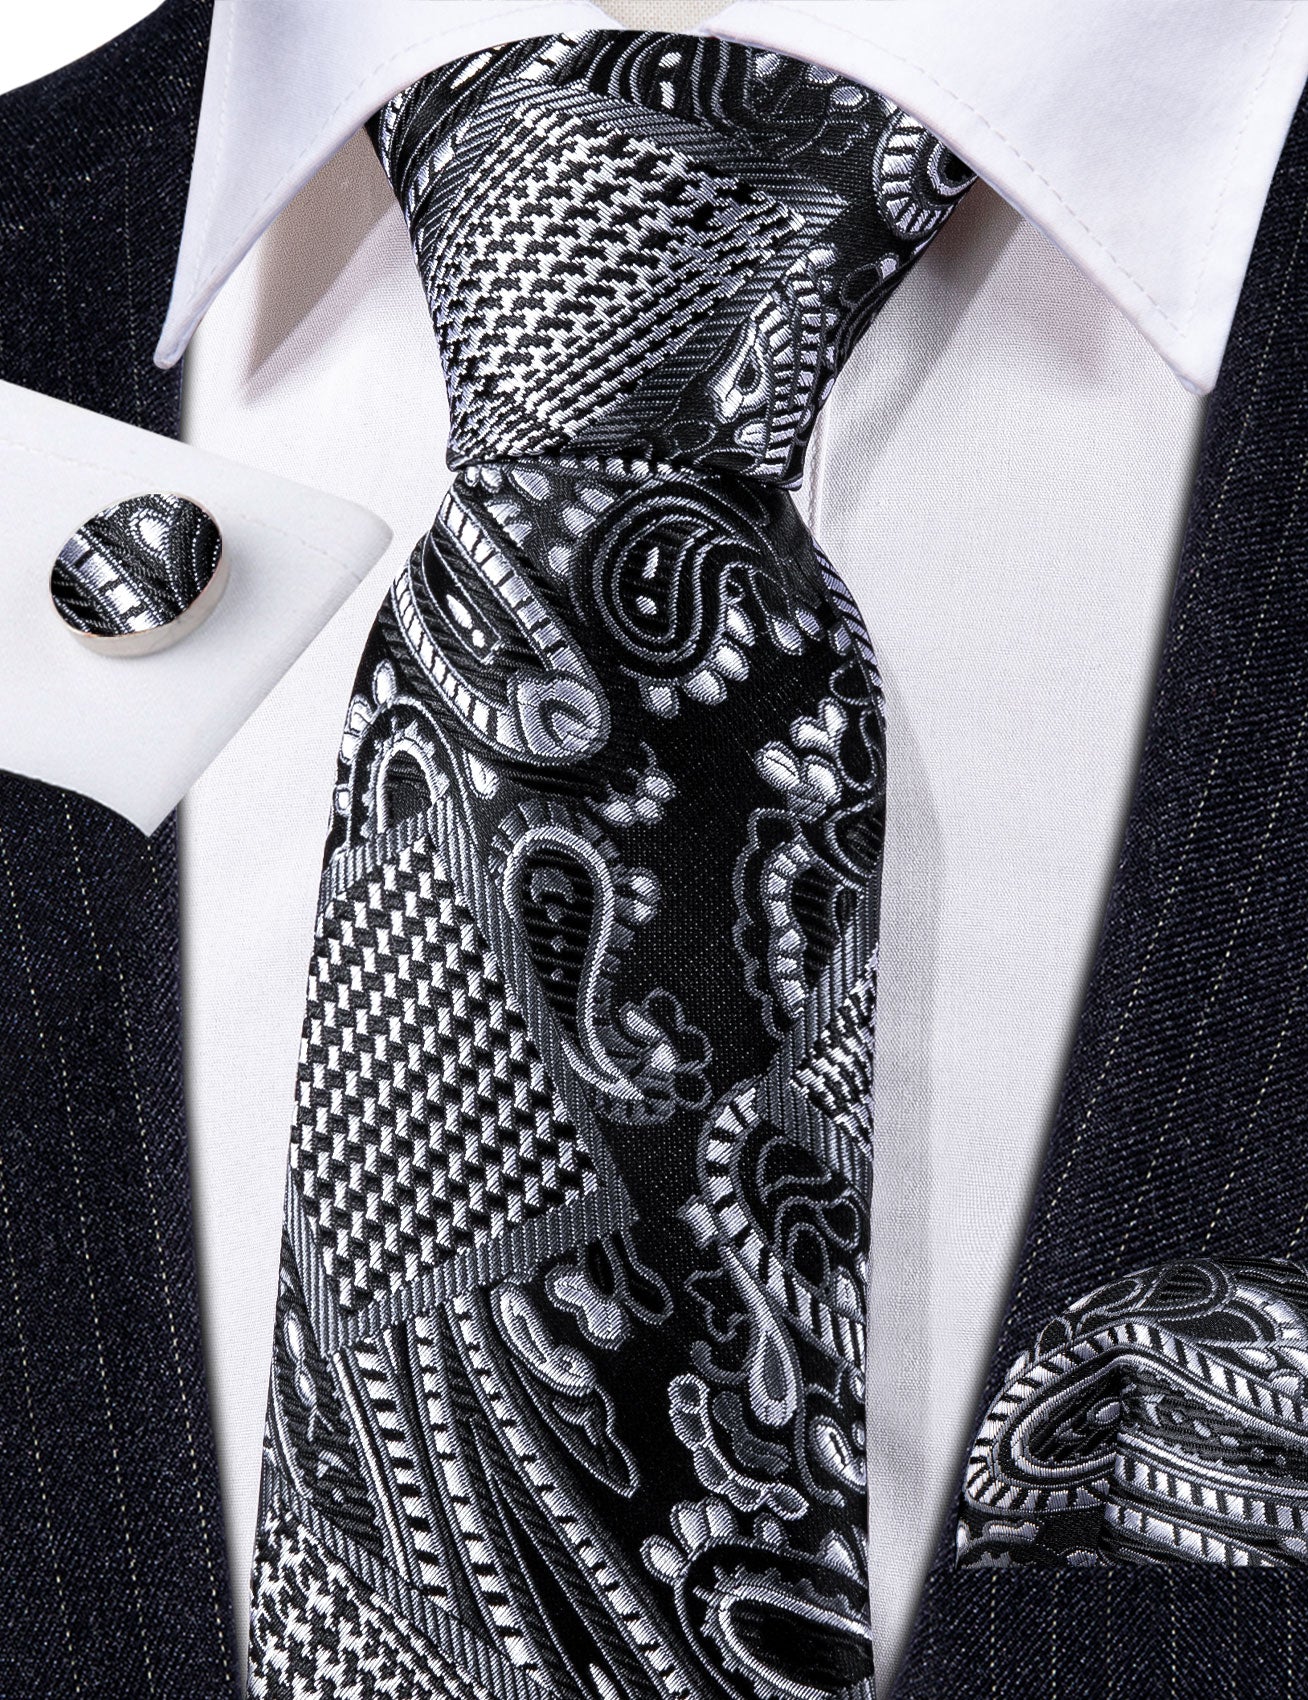 Black White Paisley Silk Tie Handkerchief Cufflinks Set